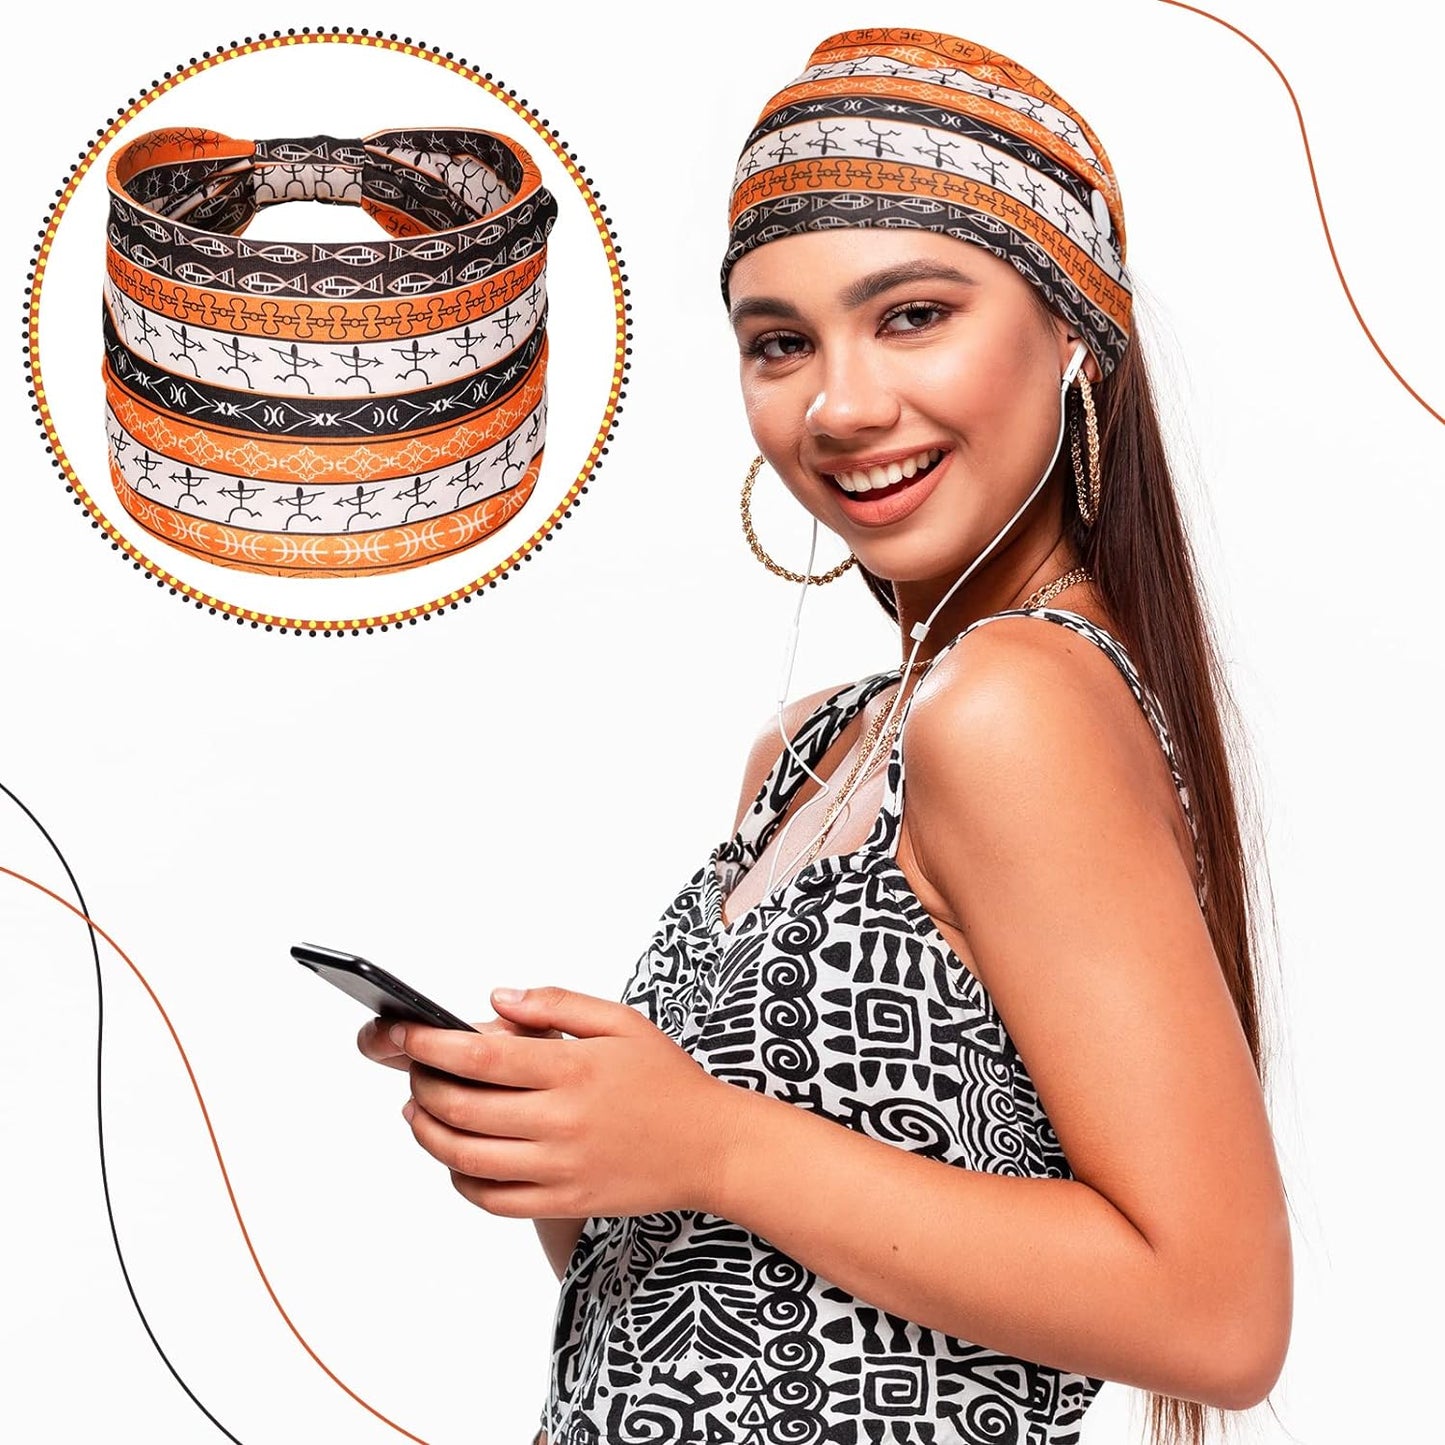 6 Pieces Headband with Buttons for Mask African Boho Knot Turban Headbands Nurse Elastic Headbands Sport Beach Hair Accessories for Women Girls (Bohemian Patterns)